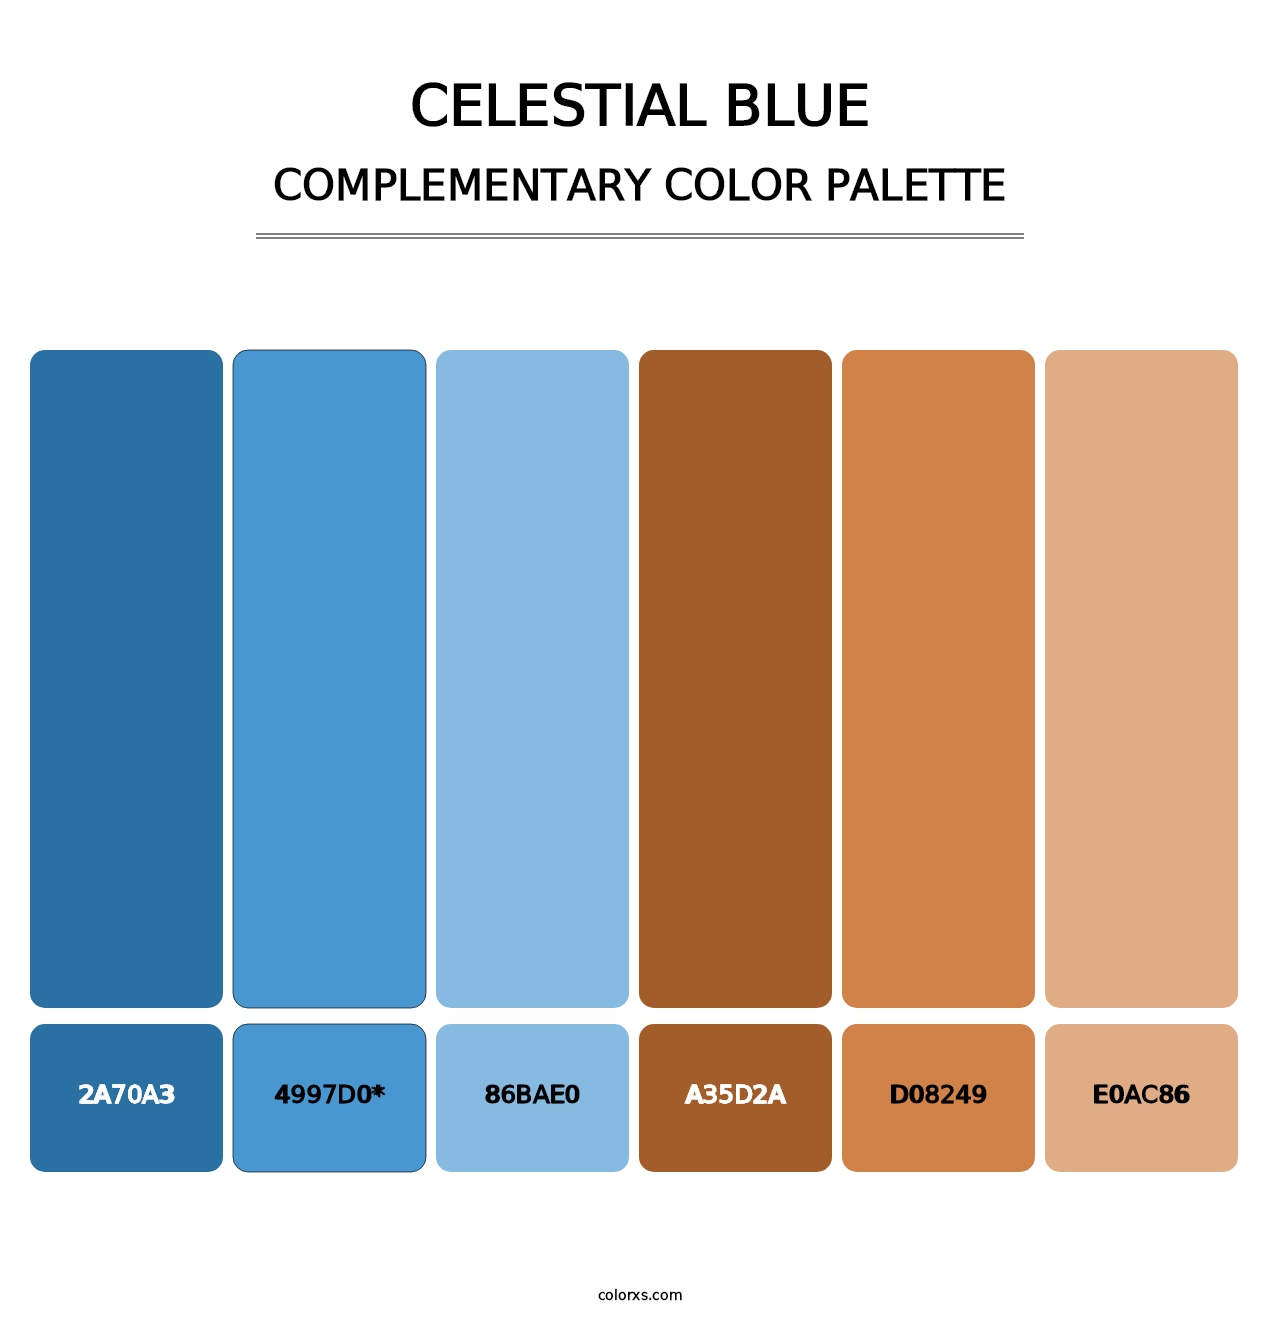 Celestial Blue - Complementary Color Palette